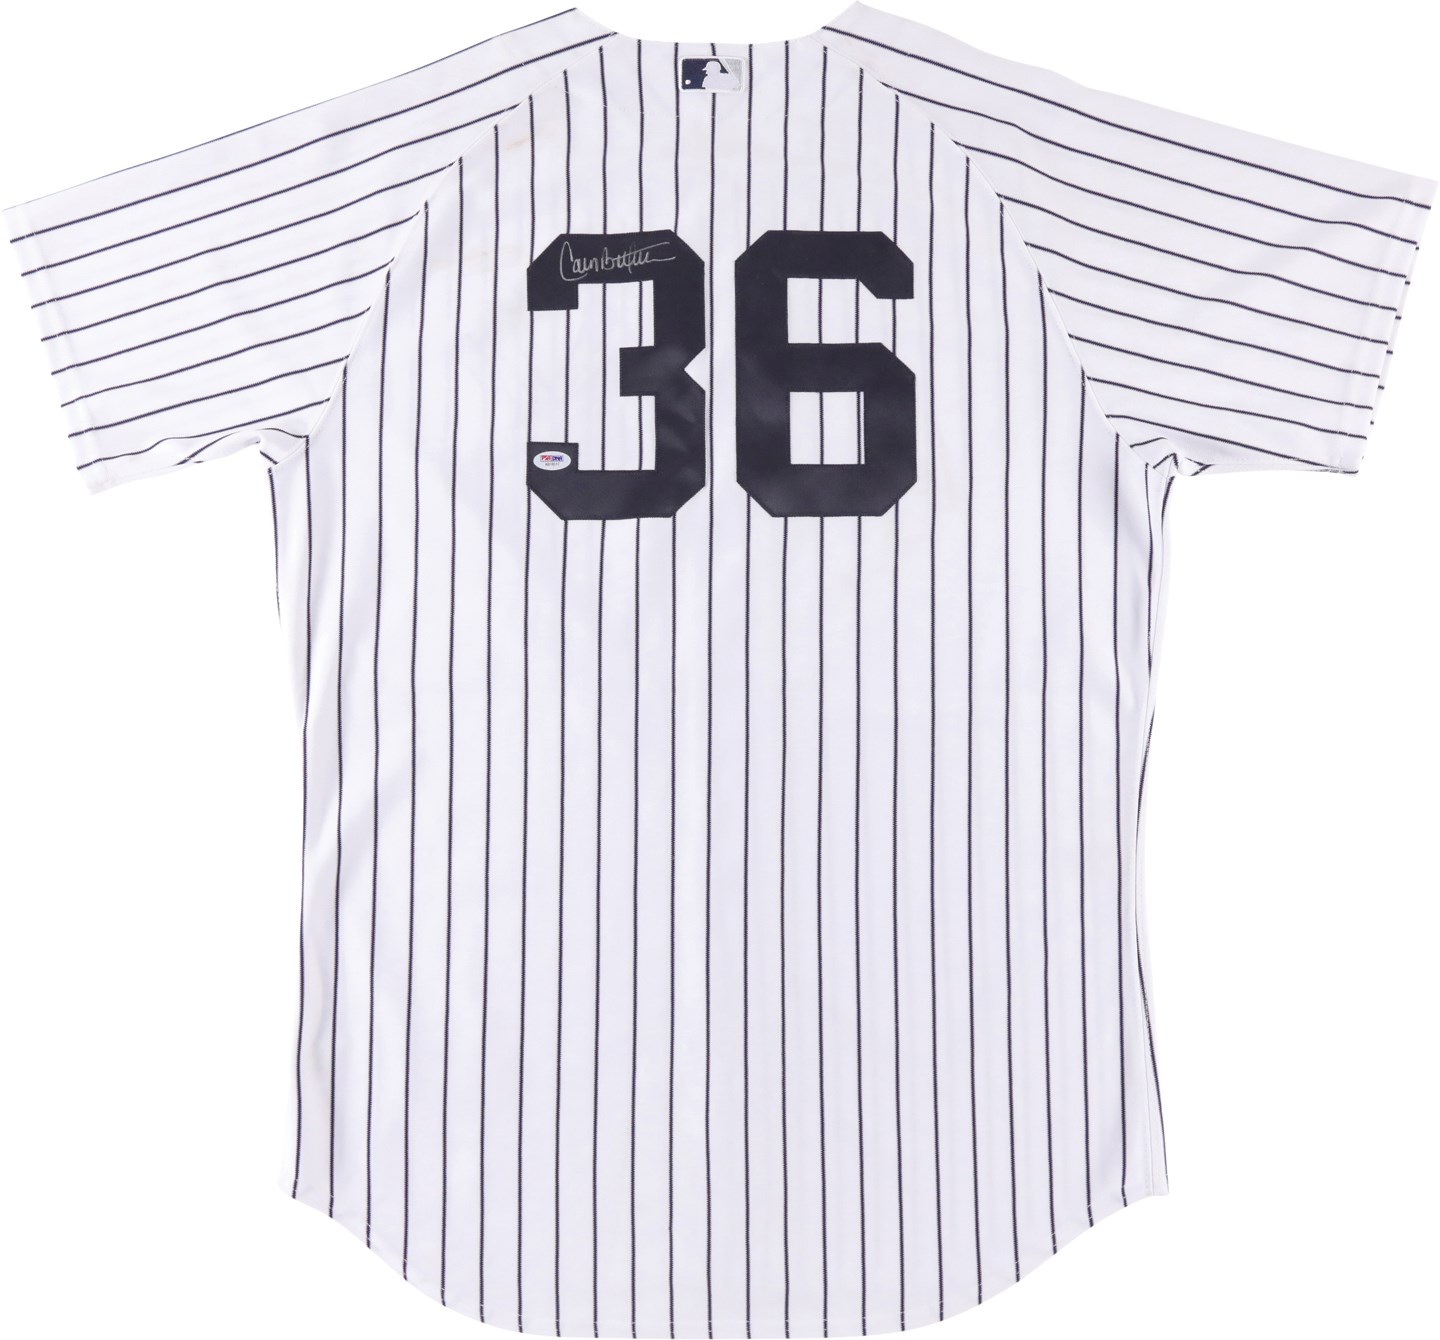 - 2015 Carlos Beltran New York Yankees Signed Game Worn Jersey (Photo-Matched & Steiner)